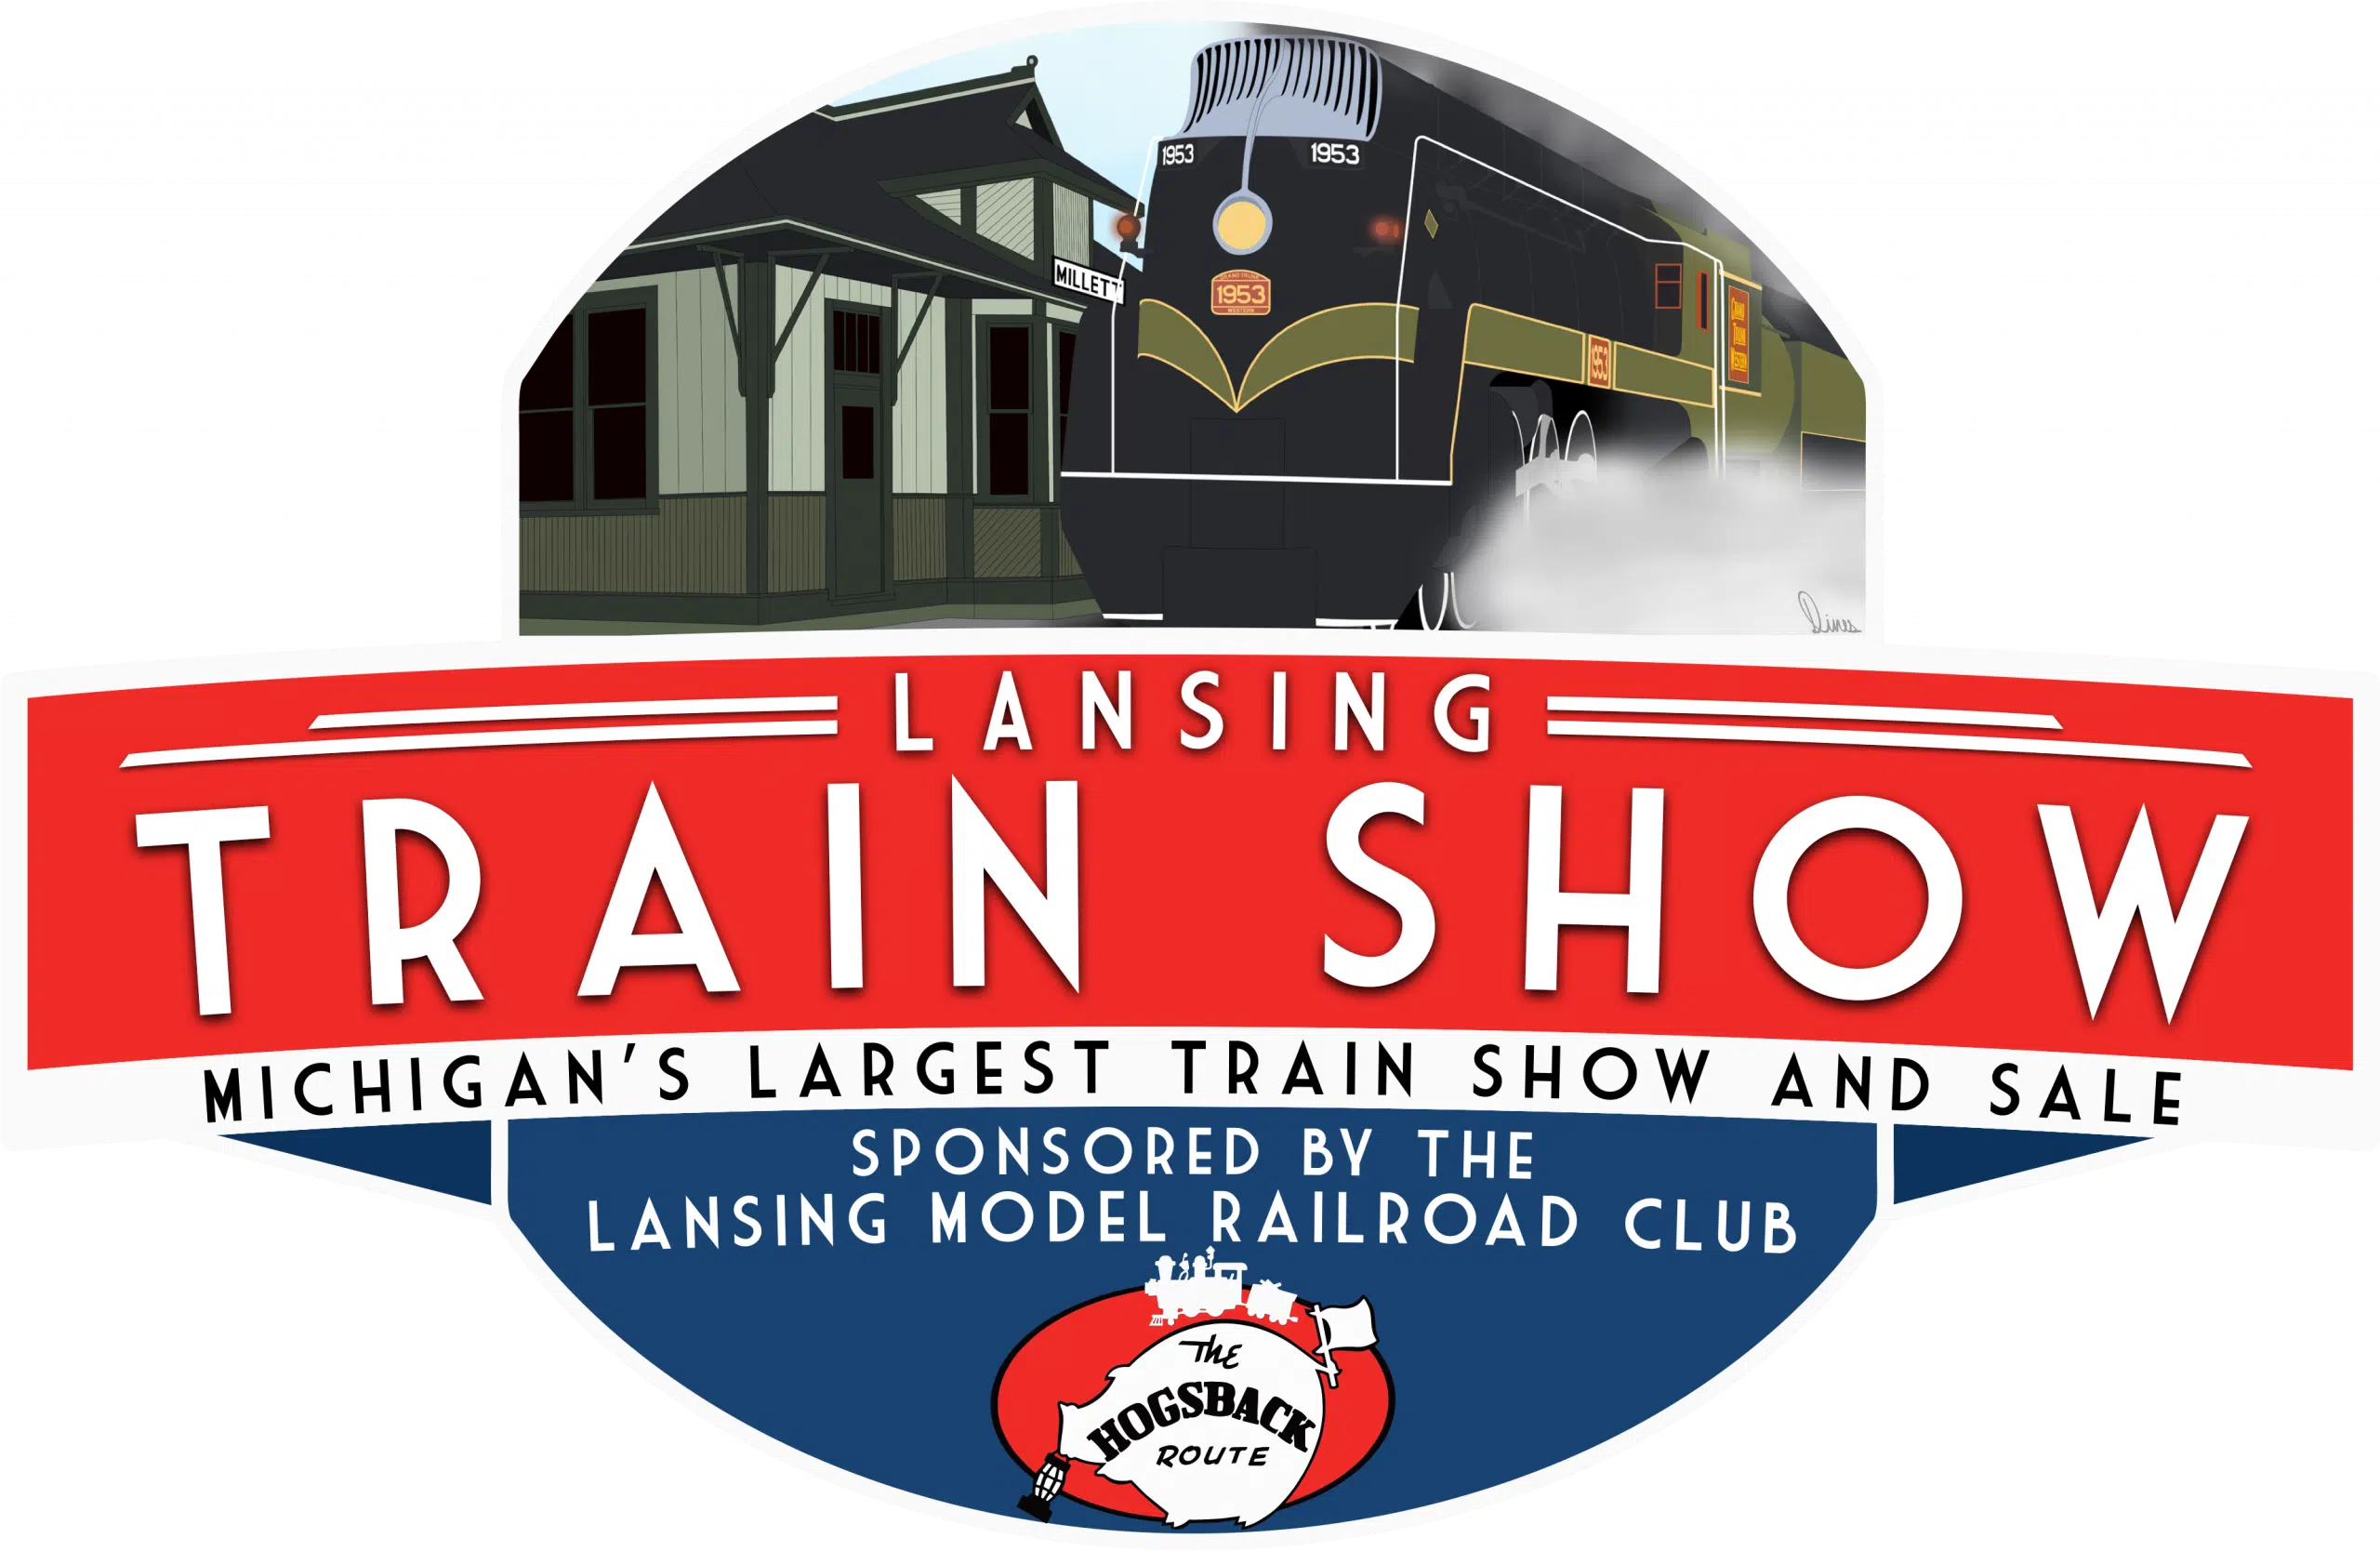 Lansing Train Show is this weekend WKZO Everything Kalamazoo 590